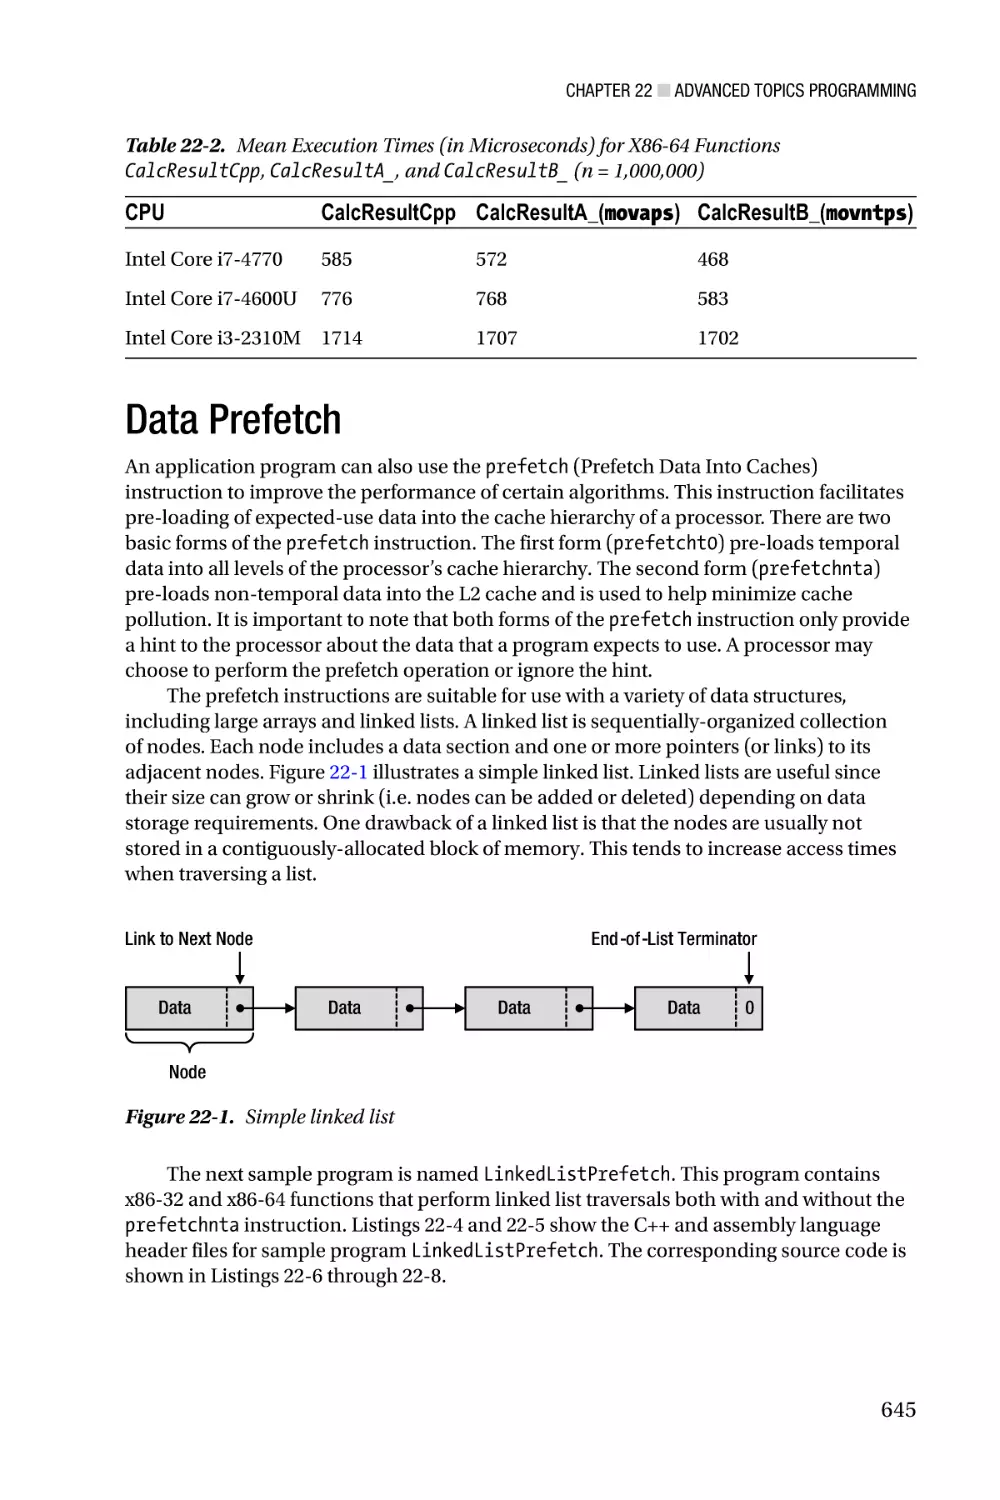 Data Prefetch